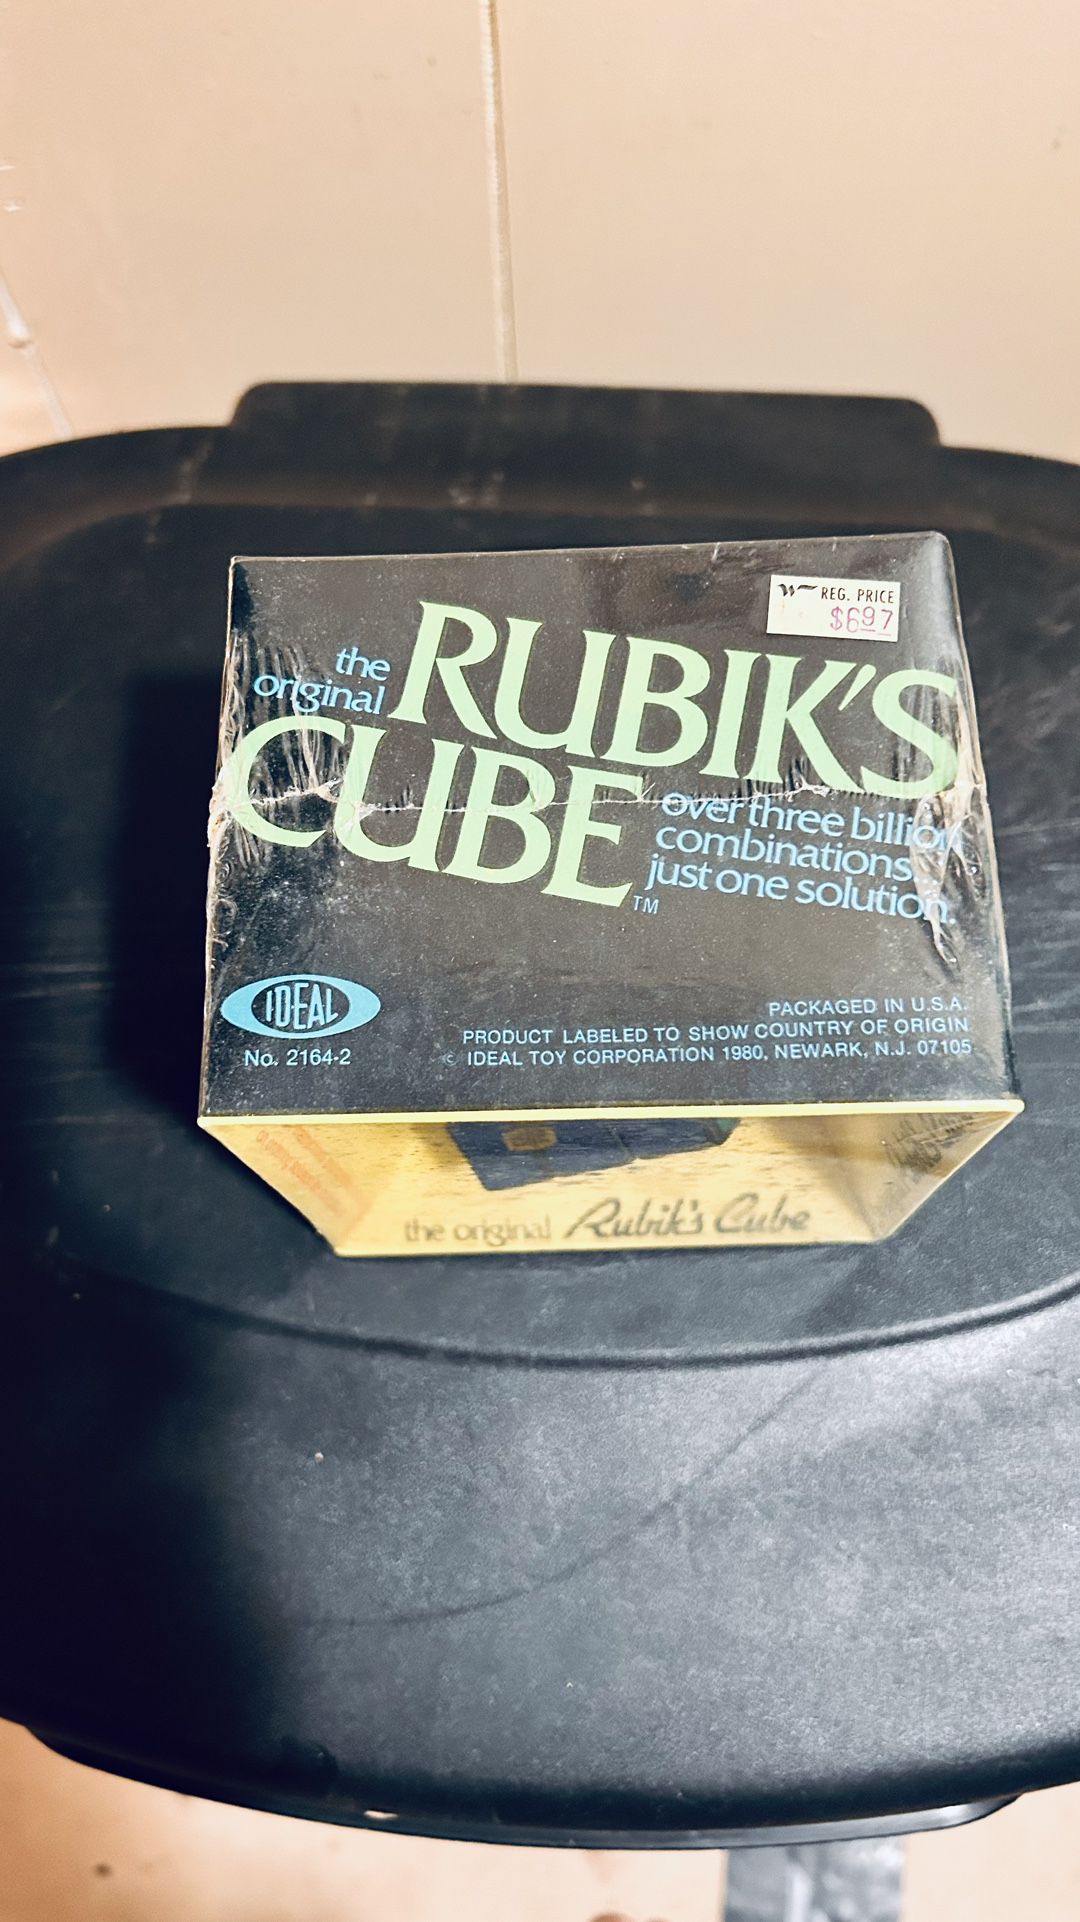 Rubik’s cube original in packaging